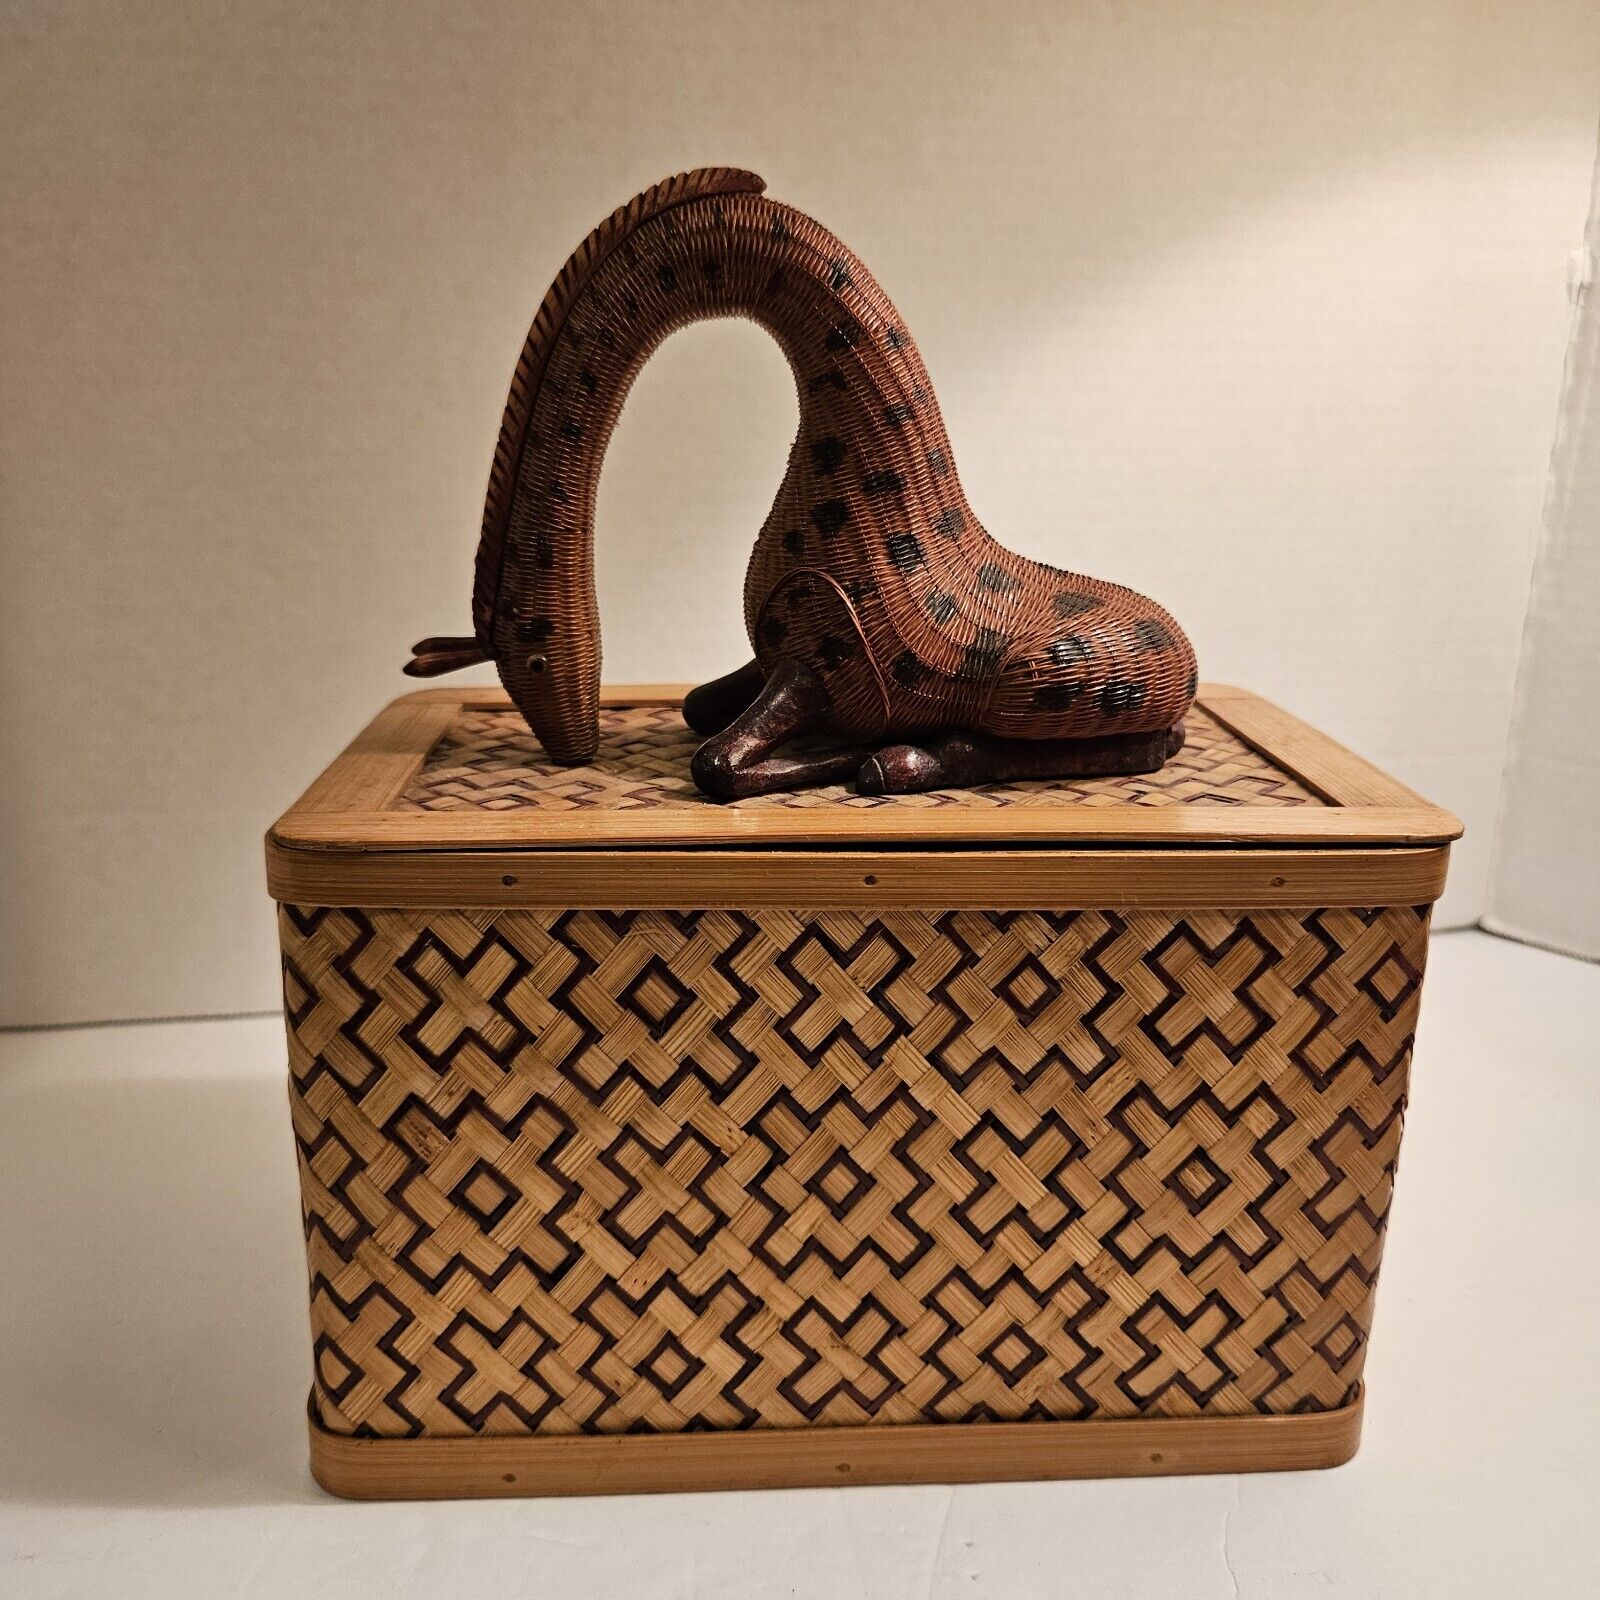 Vintage Chinese Shanghai Handicrafts Giraffe Box Wicker Woven Lidded Box